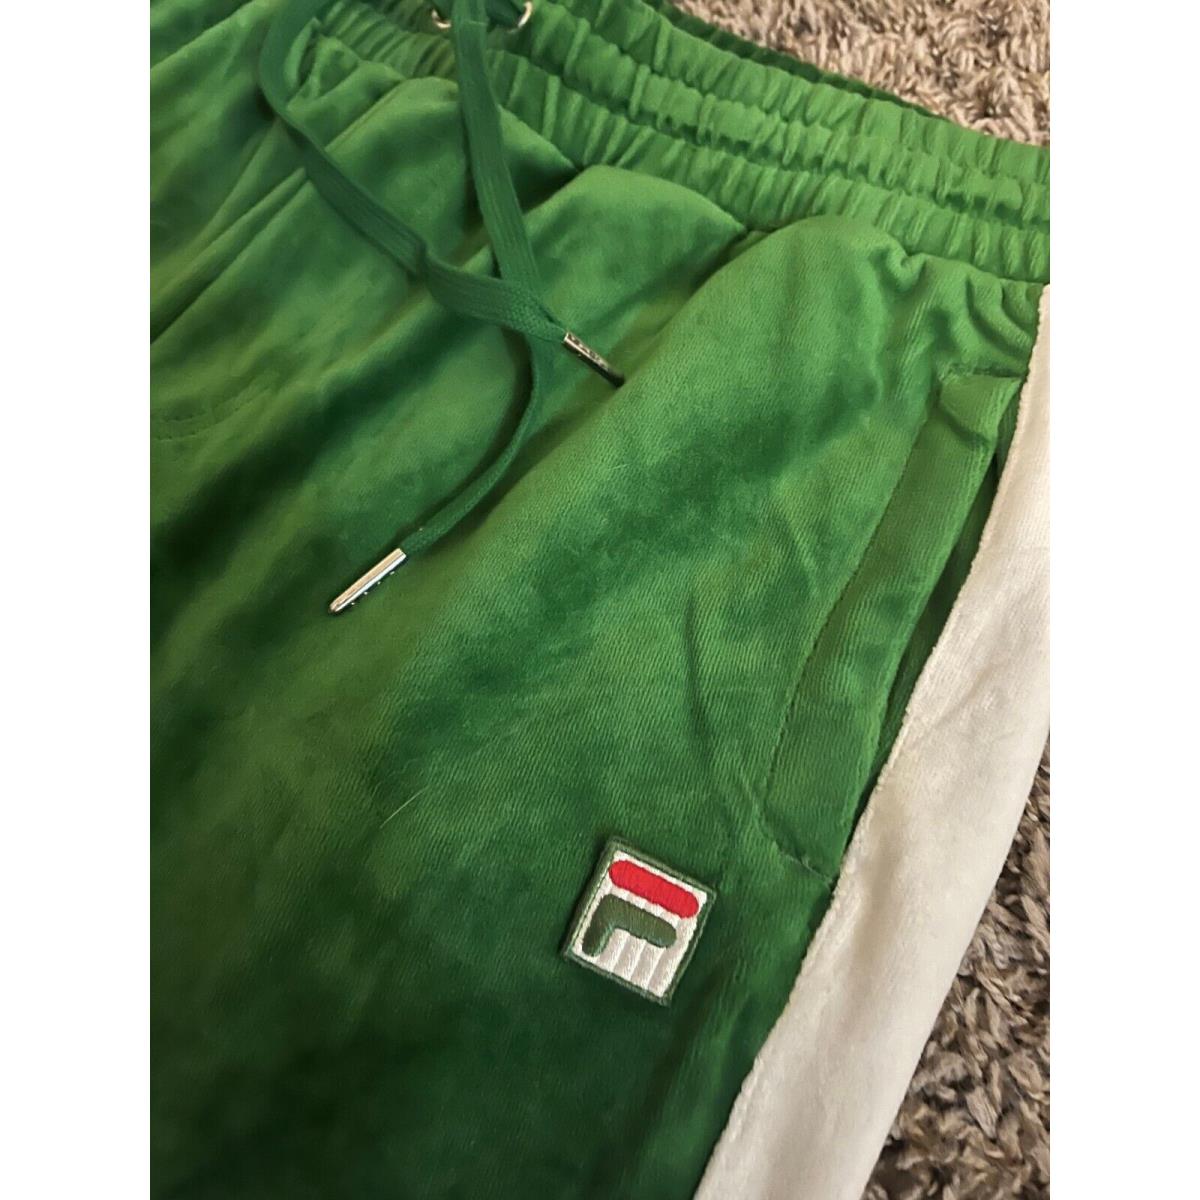 Fila clothing  - Green 10